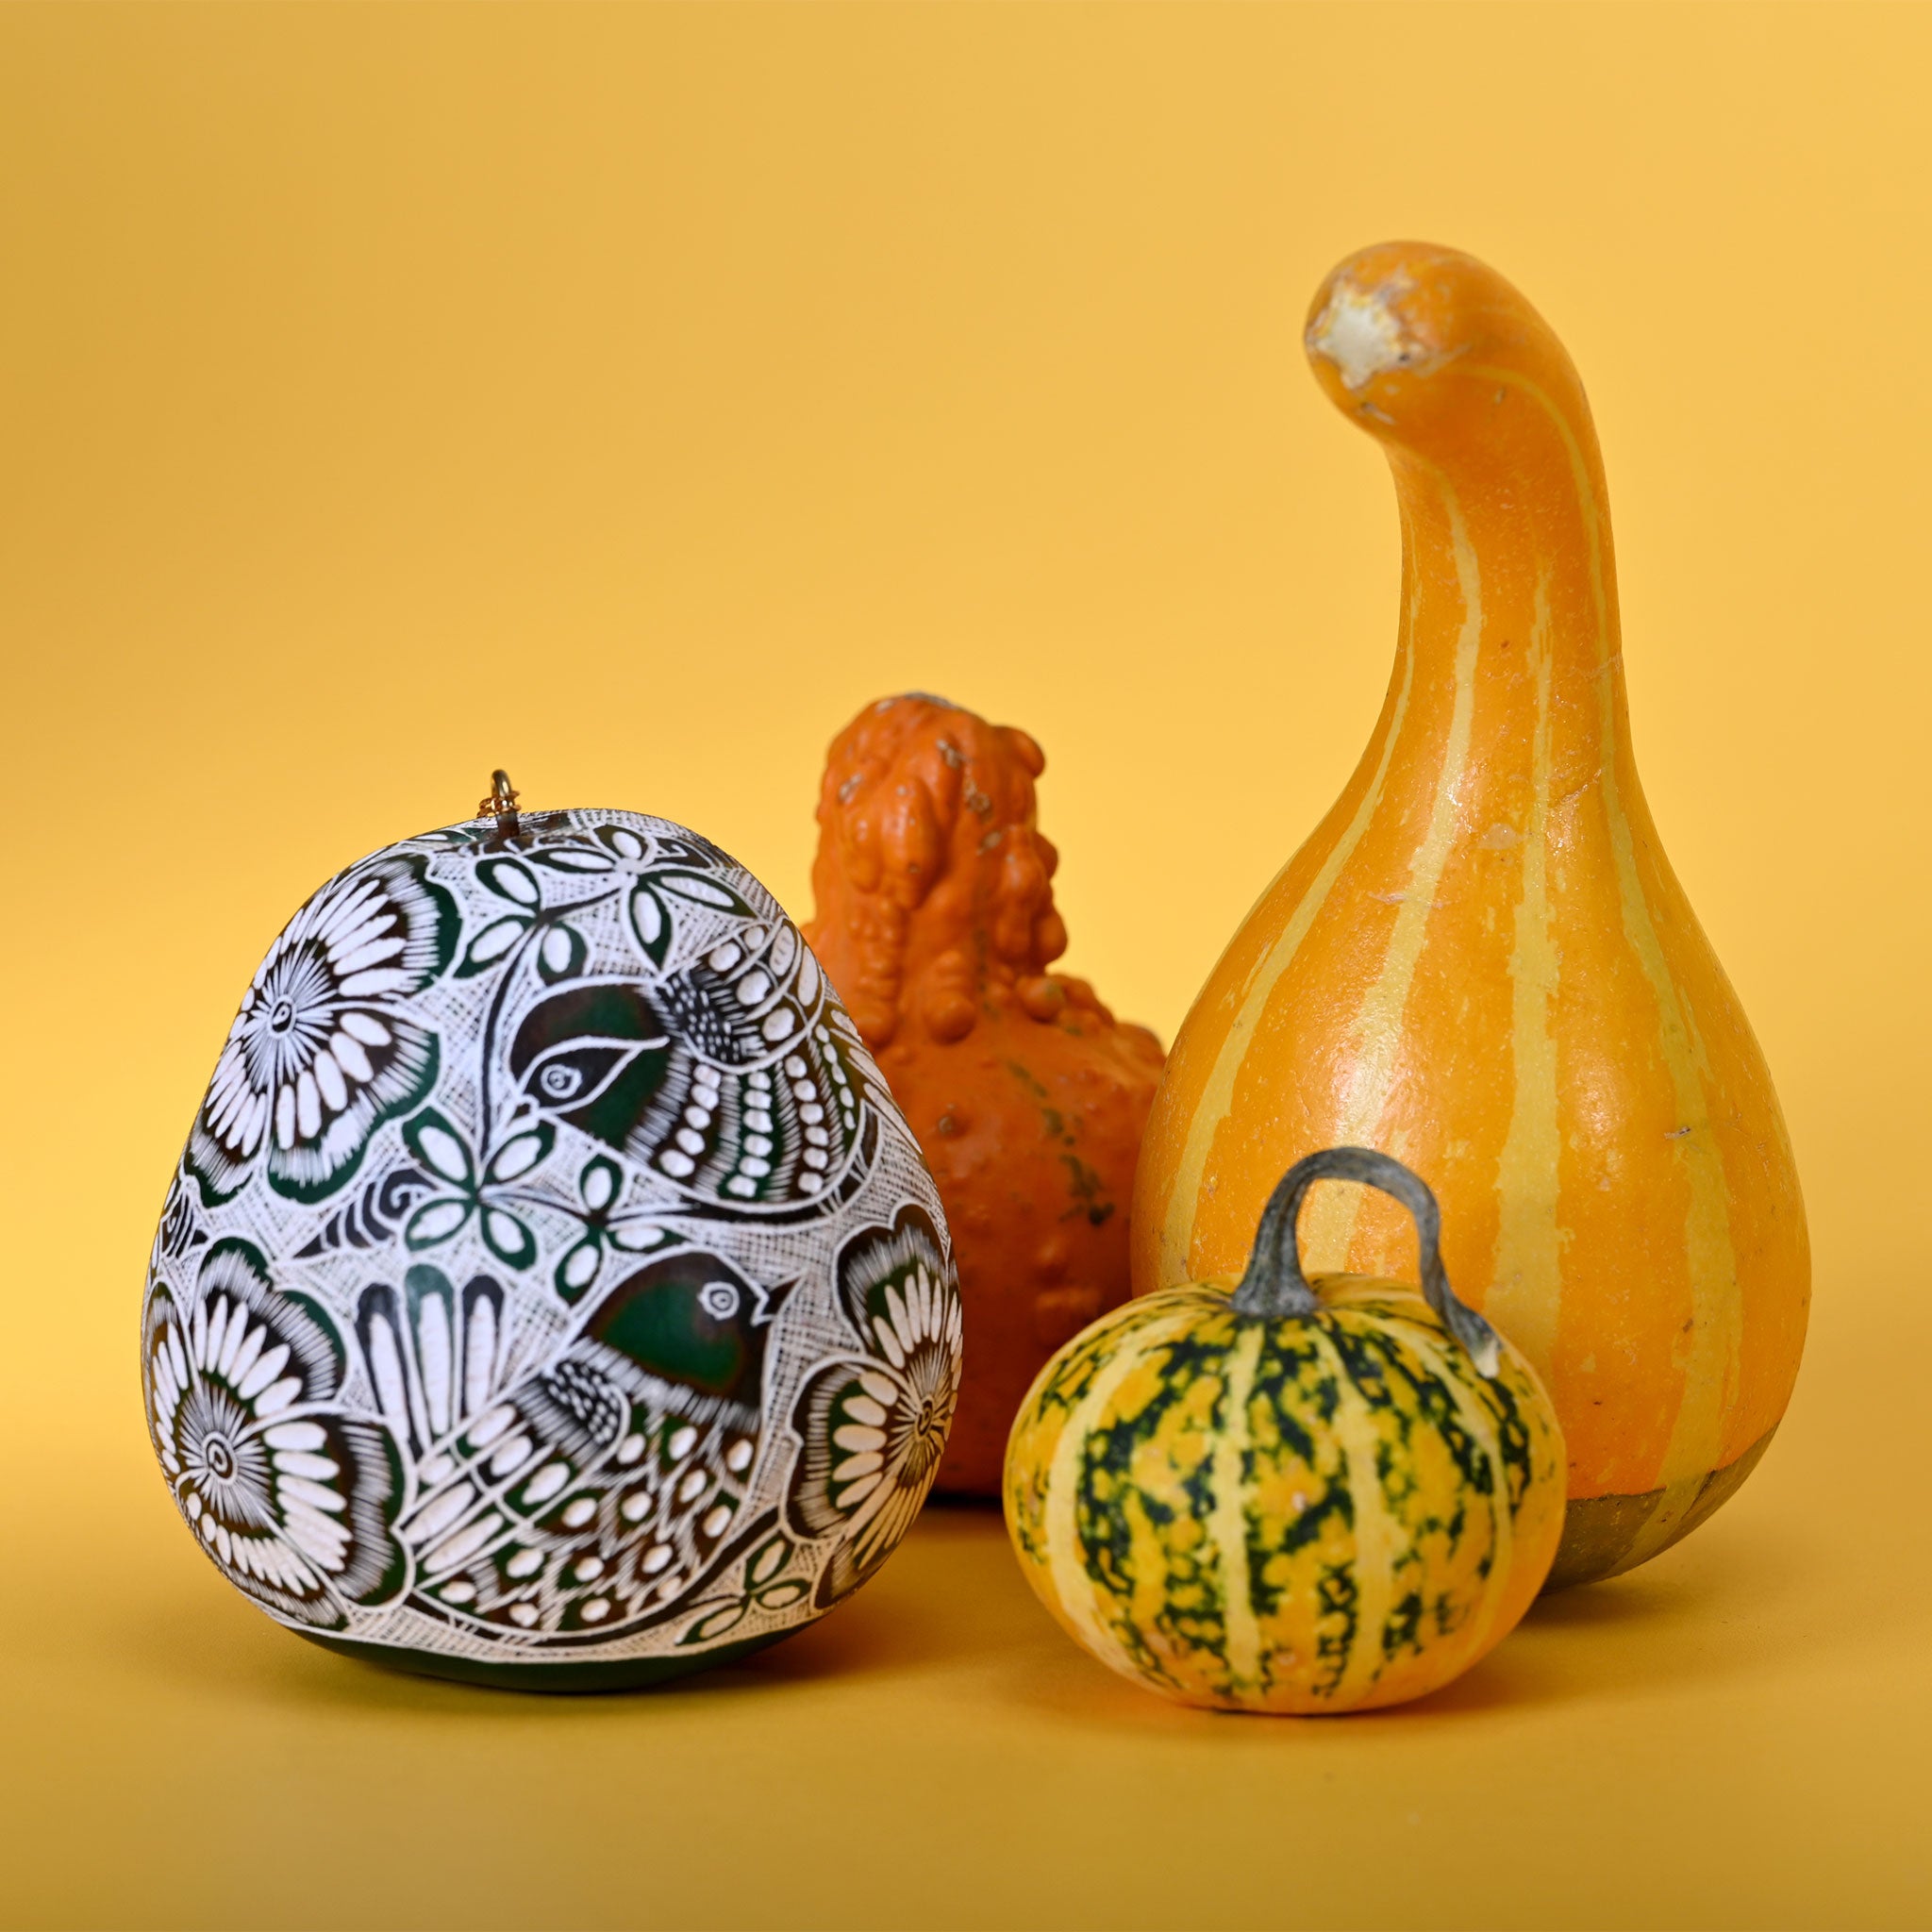 Lace Birds - Gourd Ornament